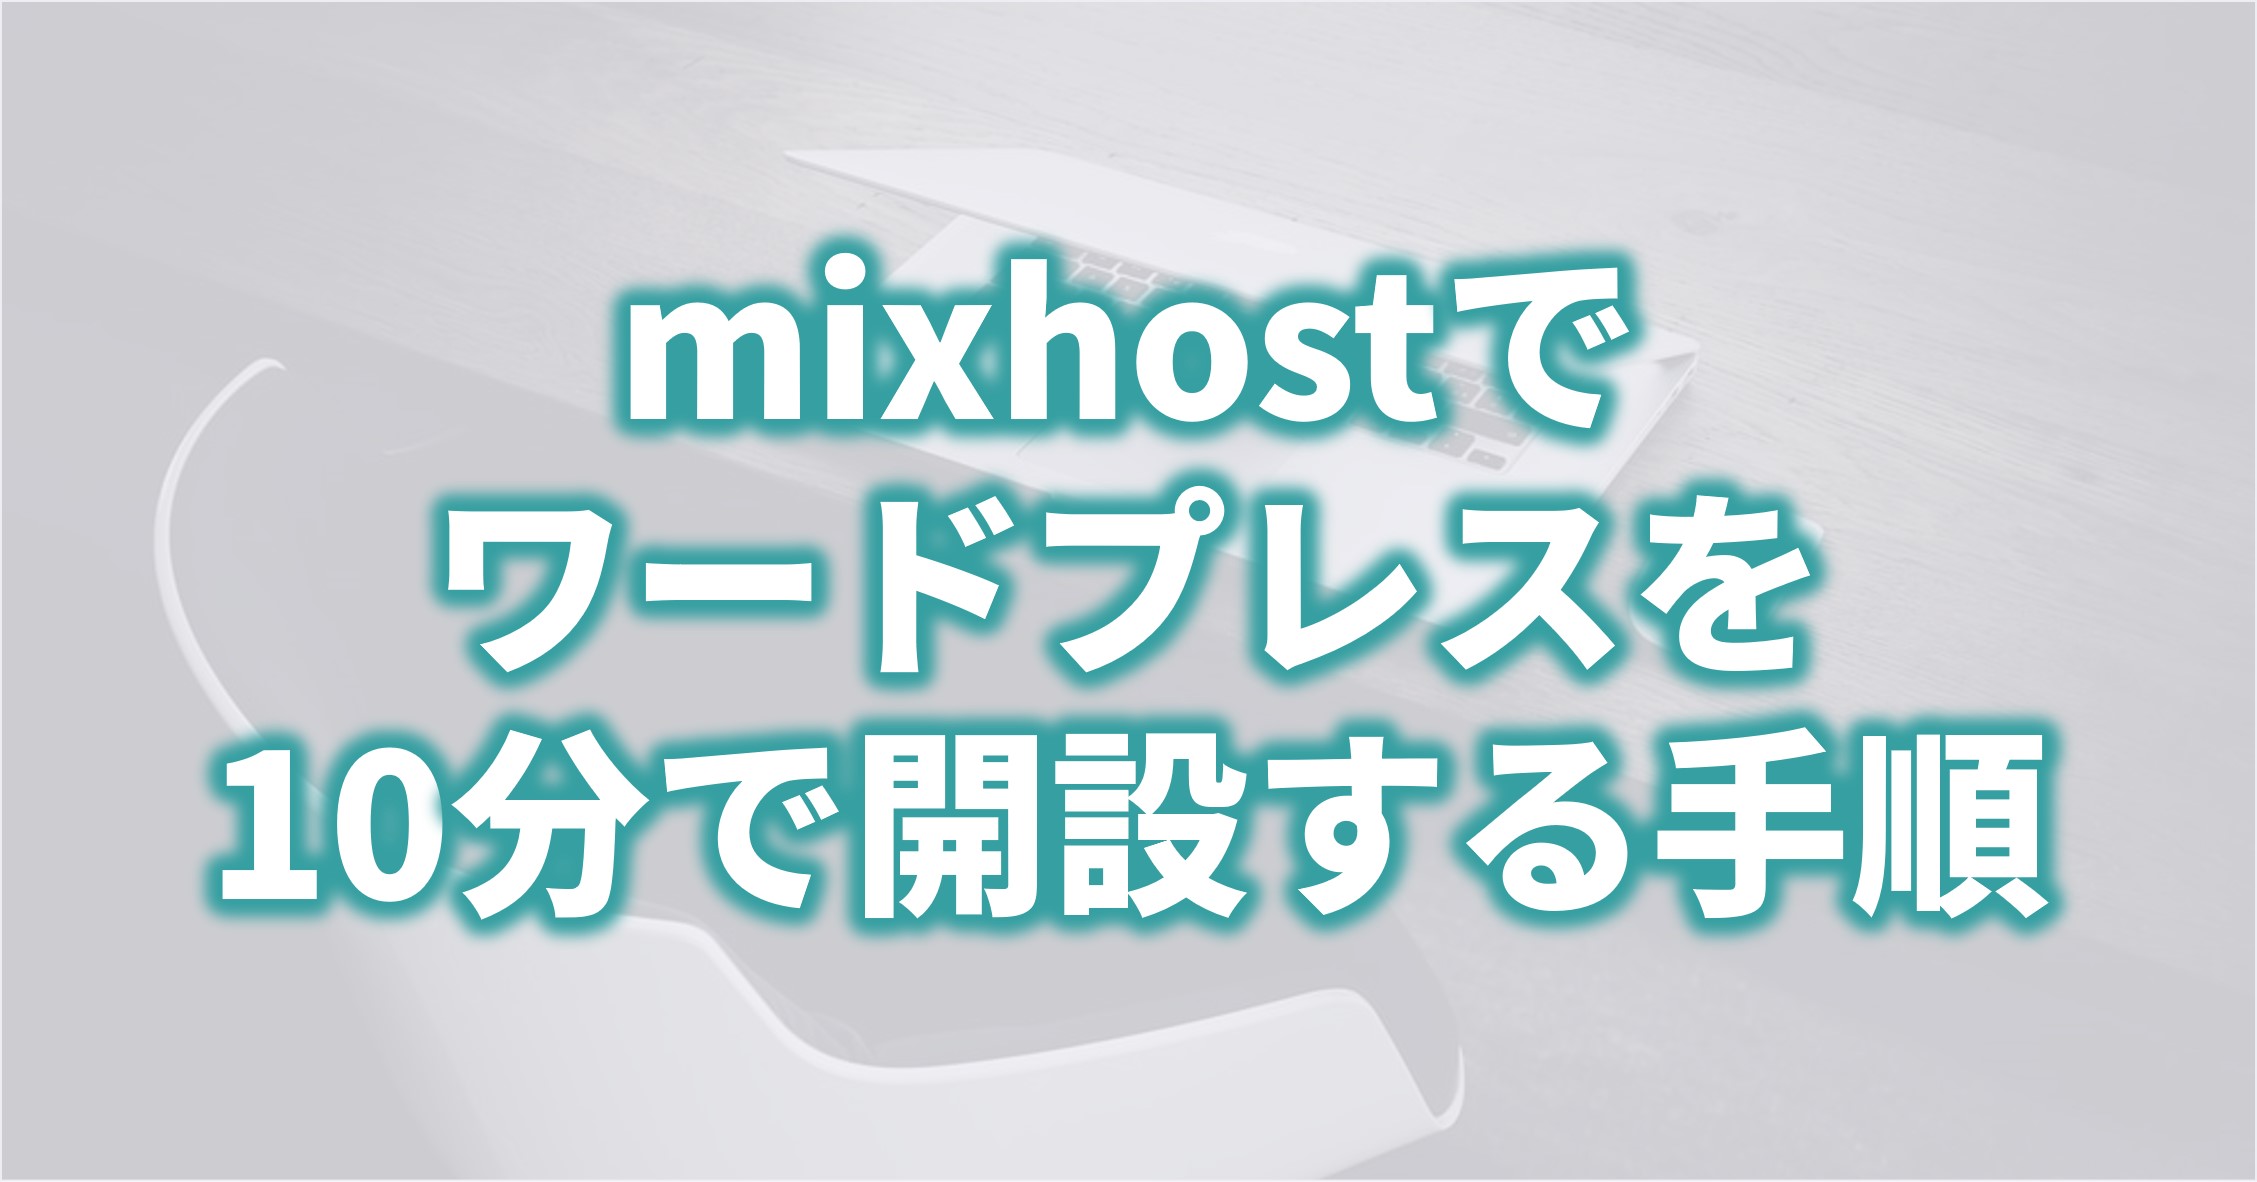 mixhostで ワードプレスを 10分で開設する手順